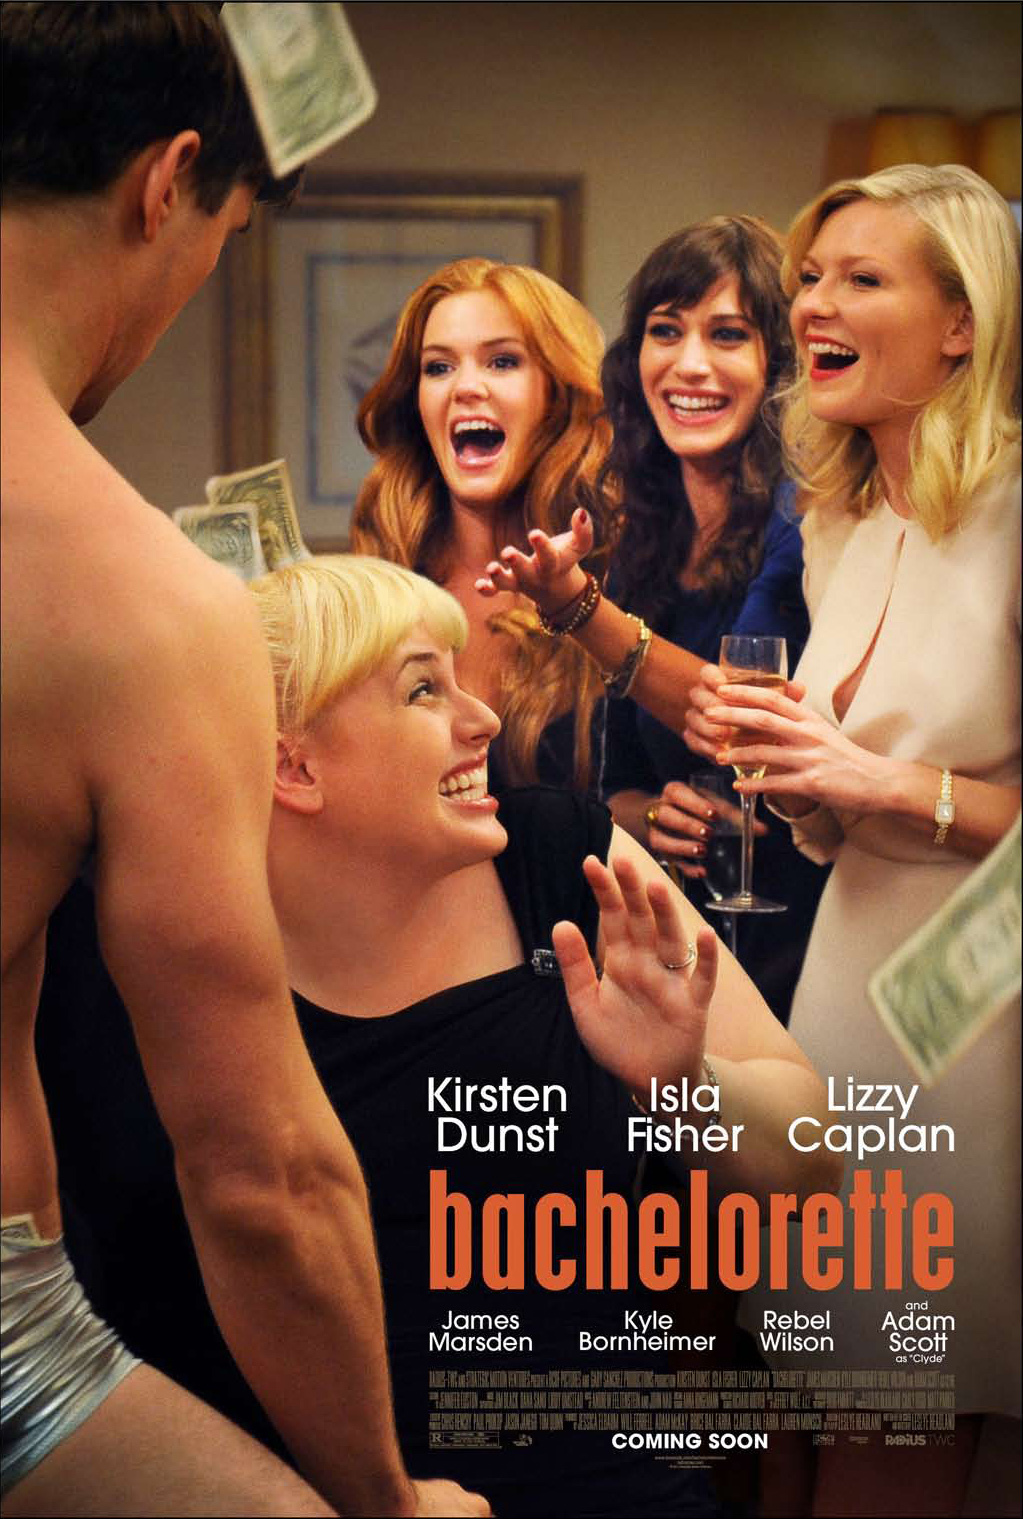 bachelorette poster